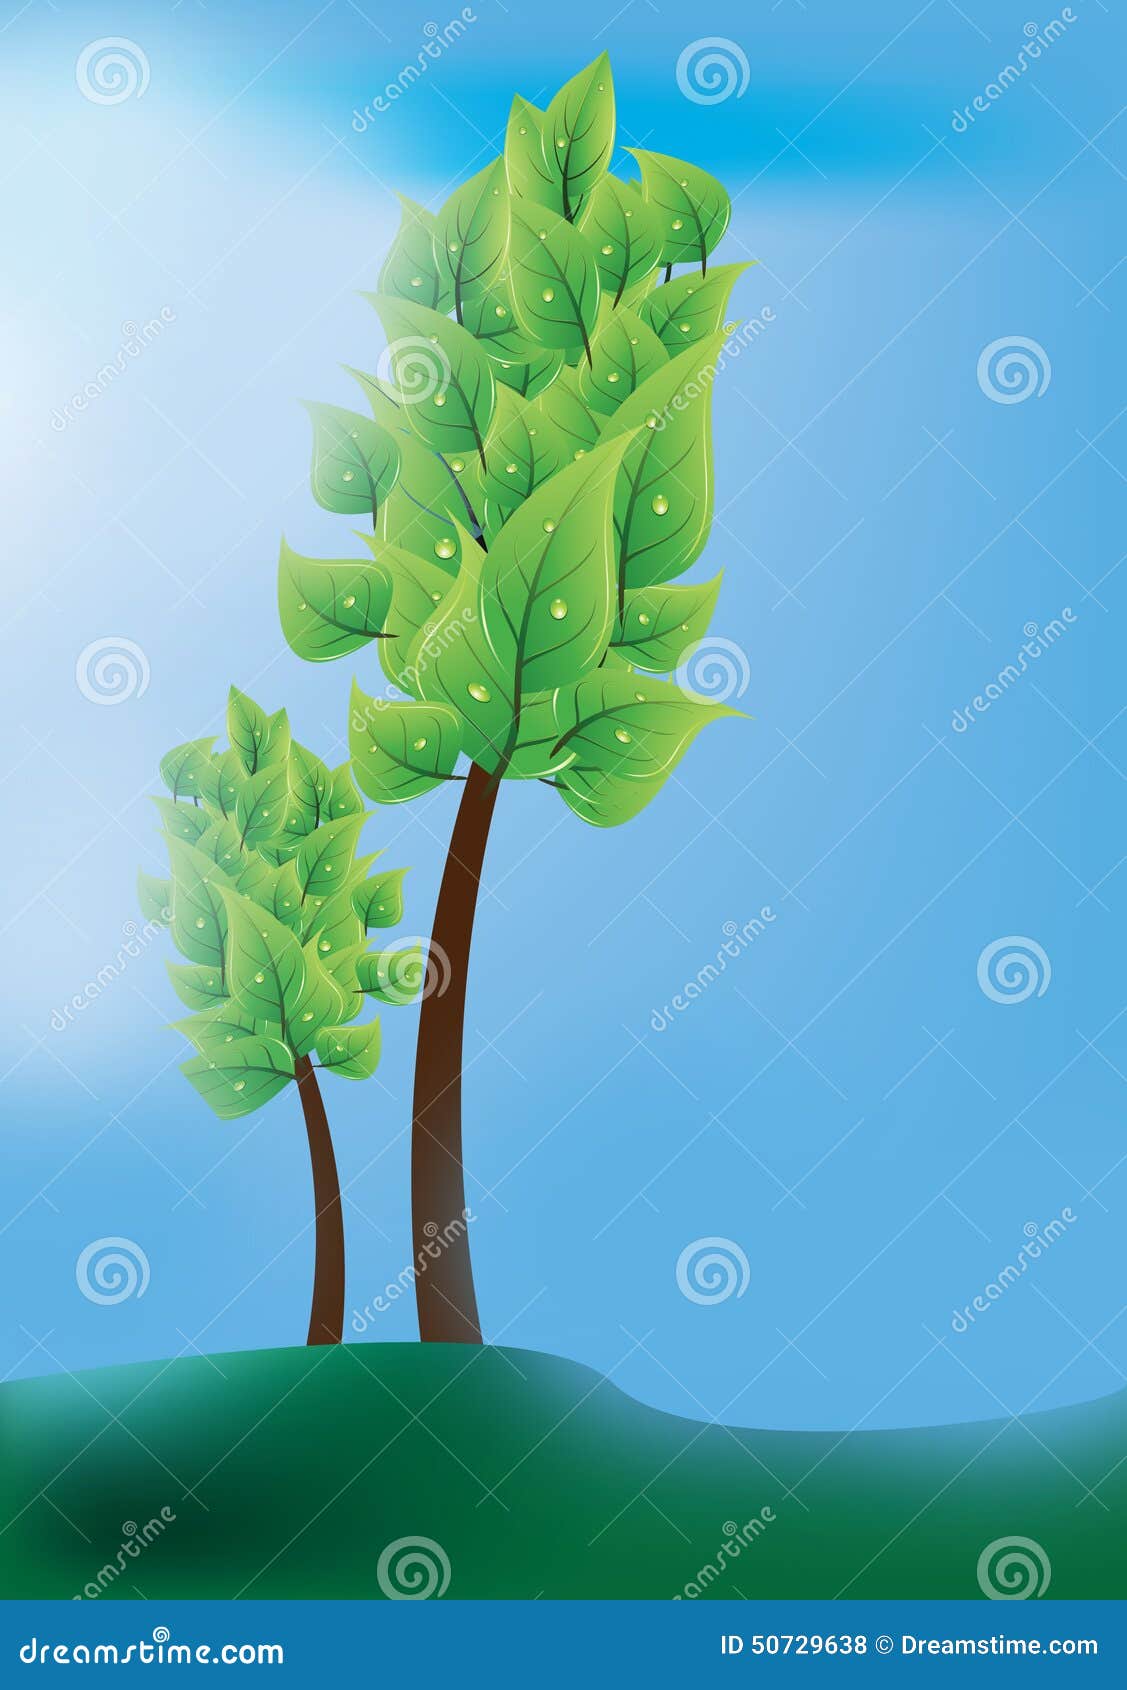 Save Tree, Save Earth Illustration 50729638 - Megapixl